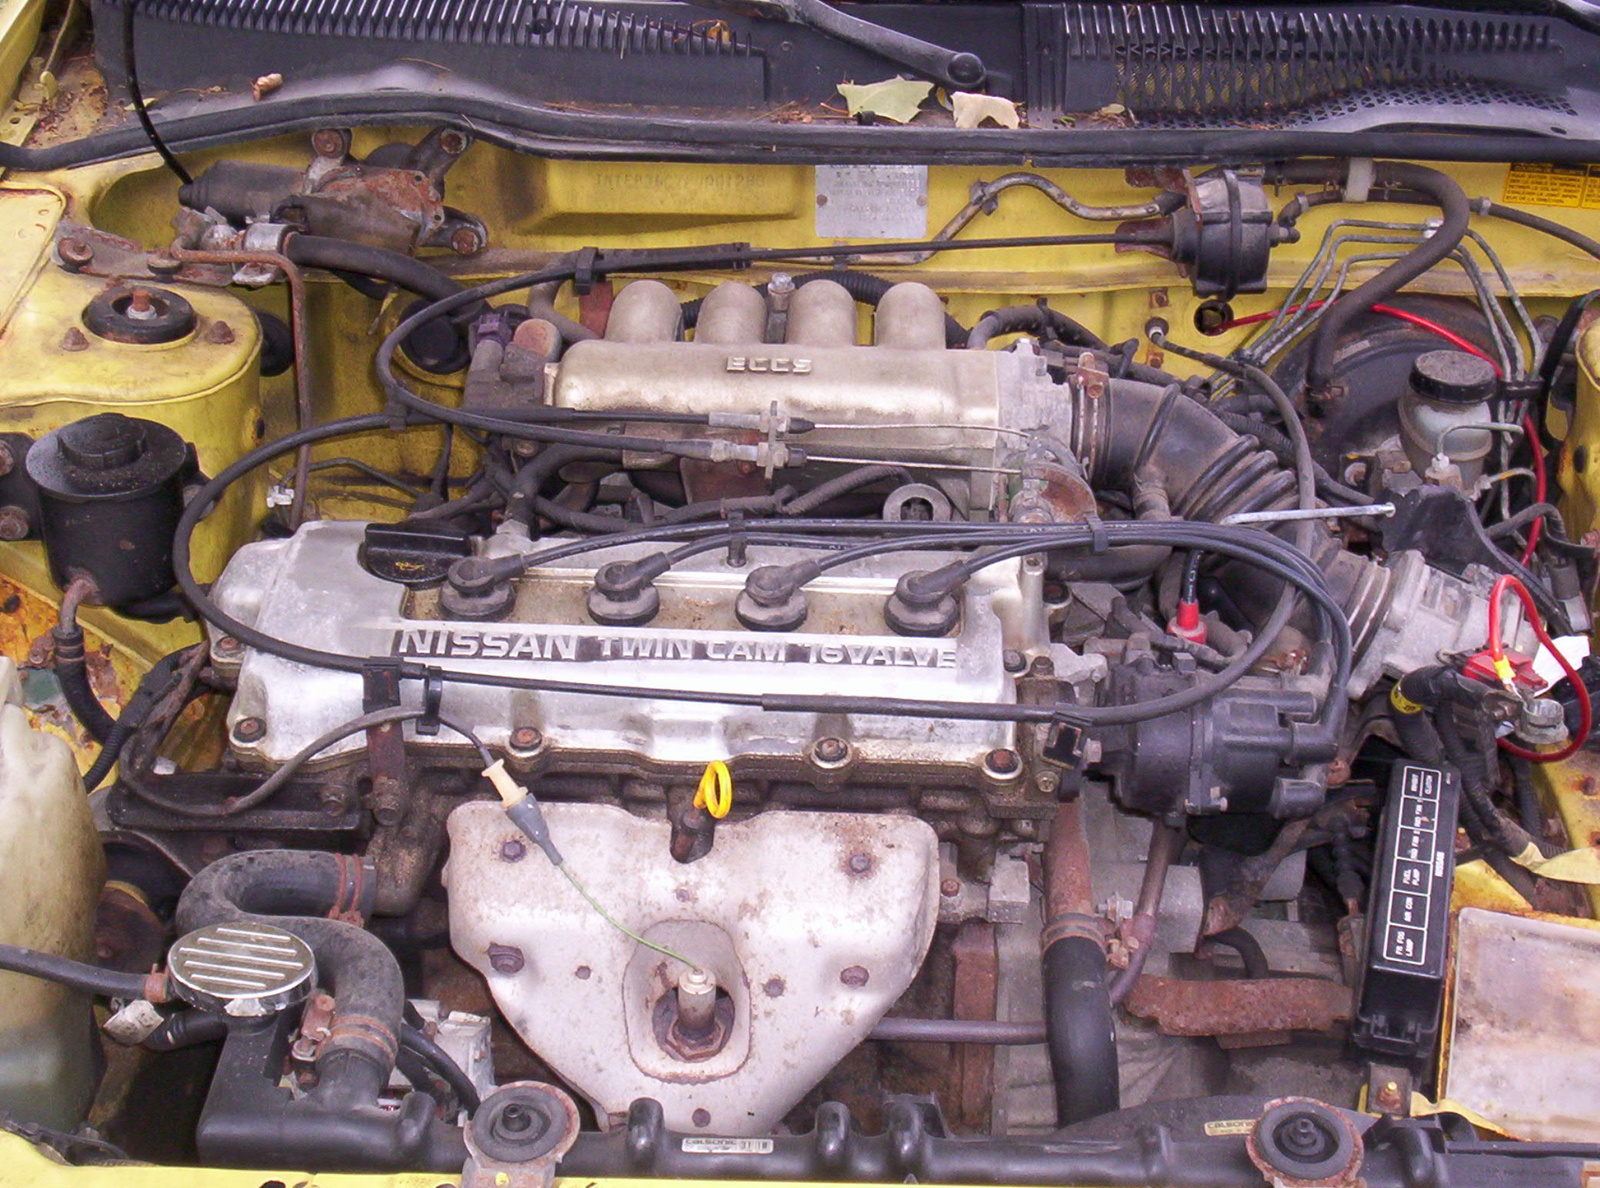 Nissan nx 1600 engine #4